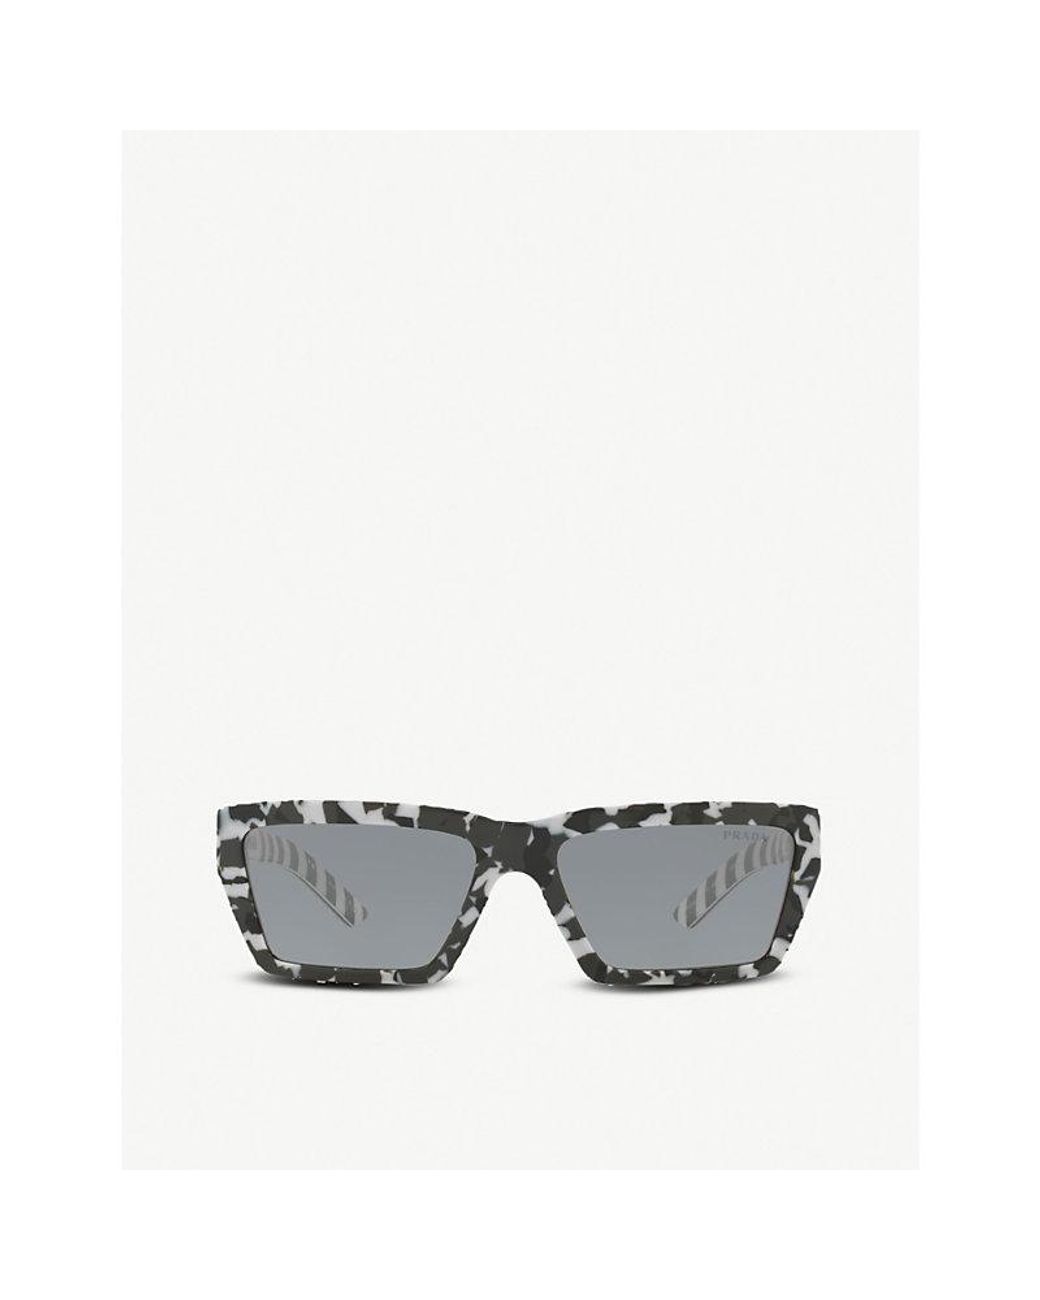 Prada Pr 04vs 57 Disguise Sunglasses in Grey | Lyst Australia